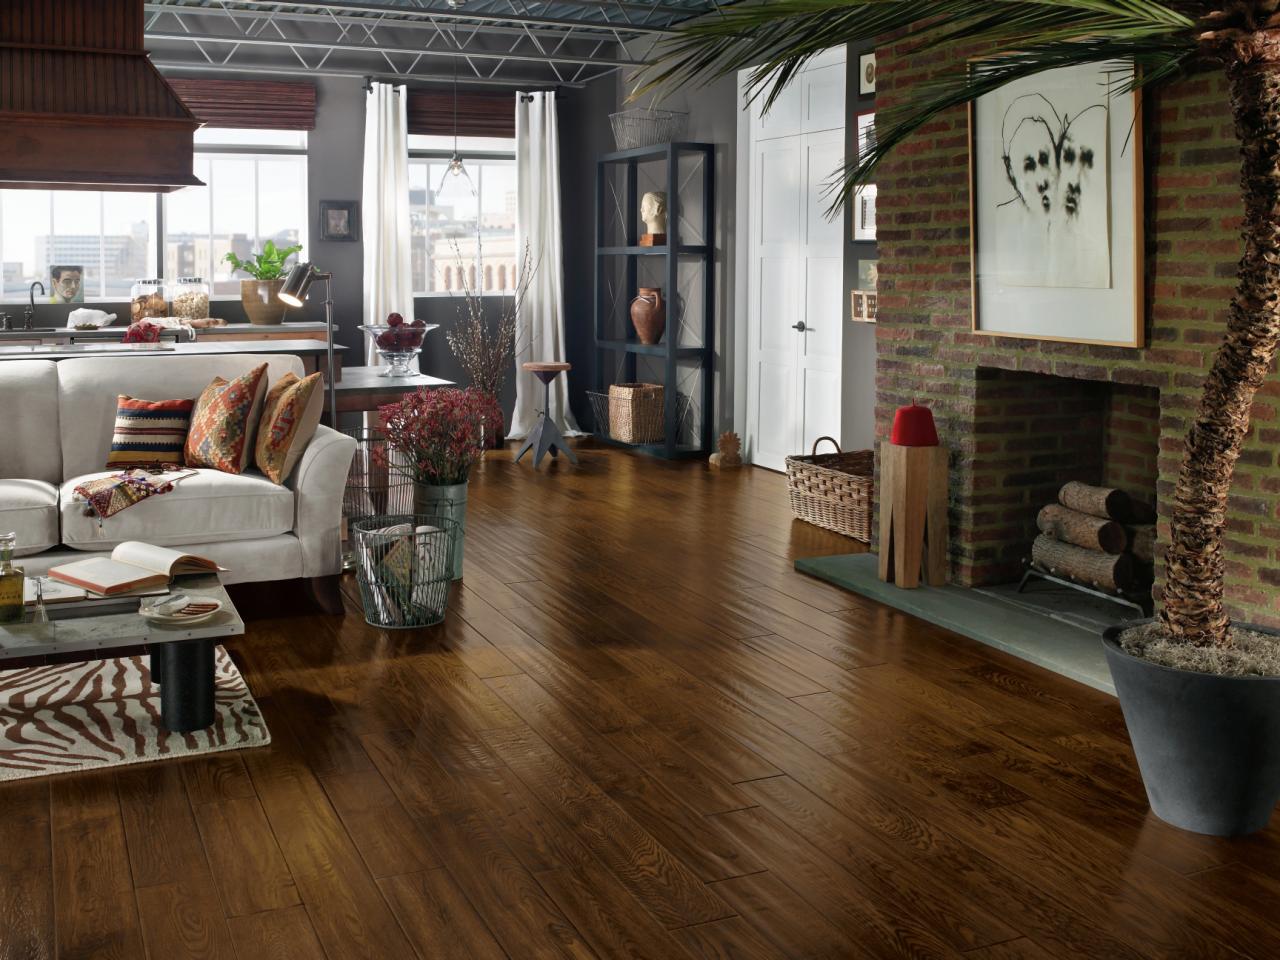 Top Living Room Flooring Options, Best Hardwood Floors For Small Spaces